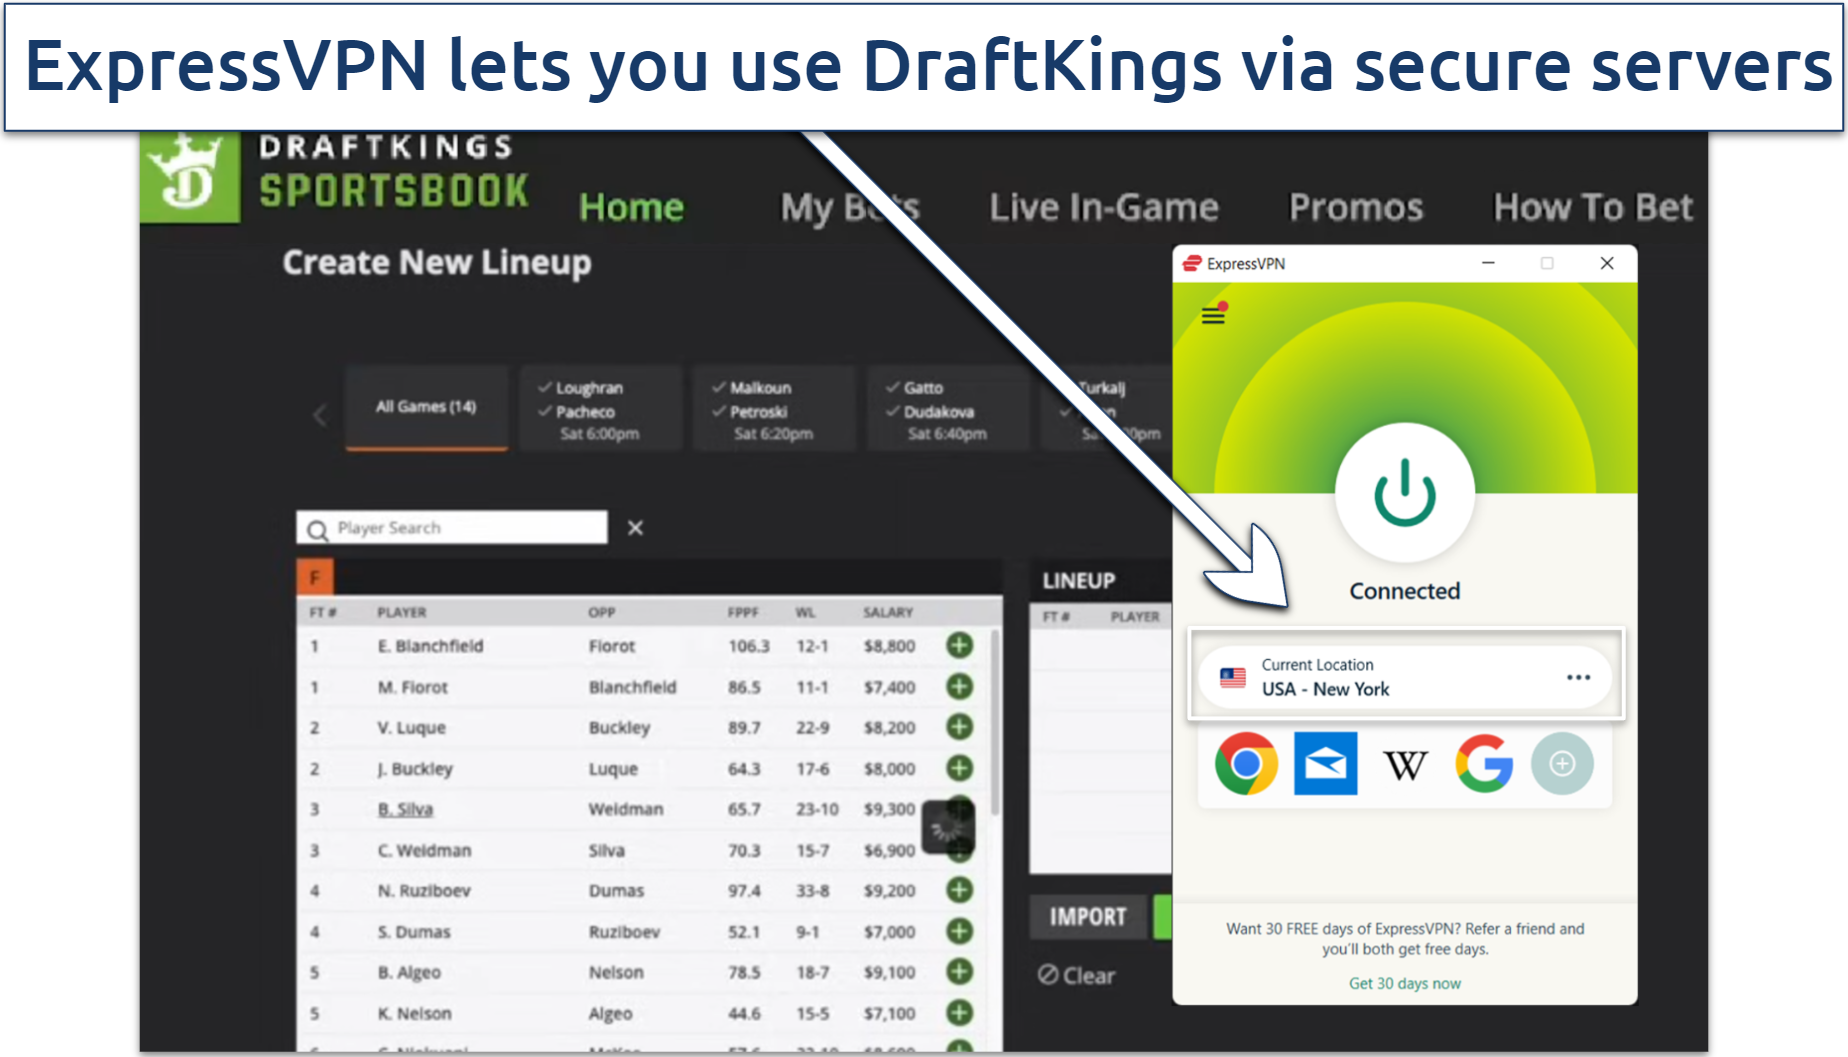 Screenshot showing DraftKings working with ExpressVPN